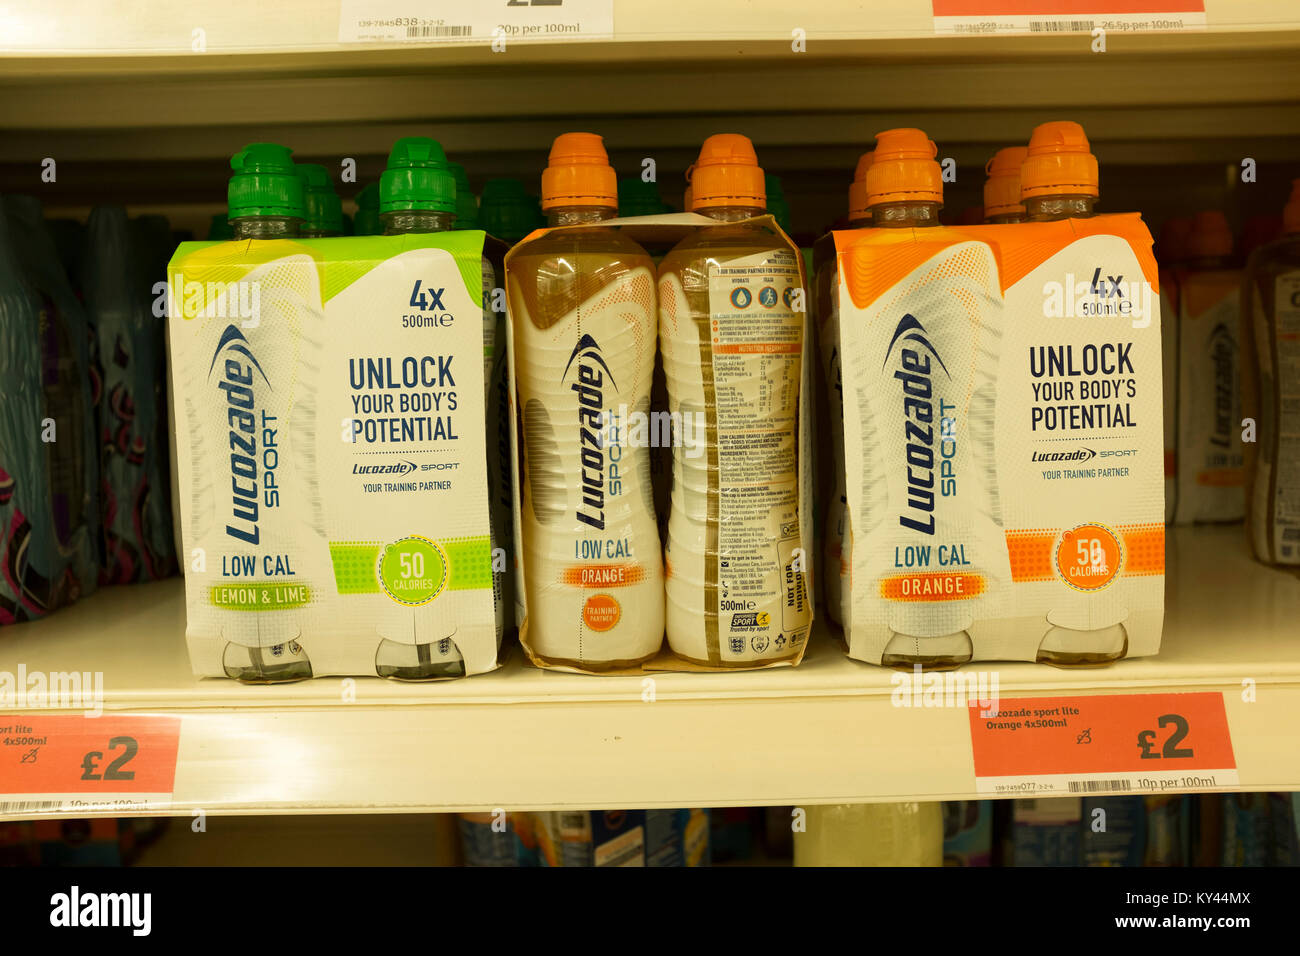 Low calorie Lucozade Sport drink bottles on display in supermarket shelves, UK Stock Photo